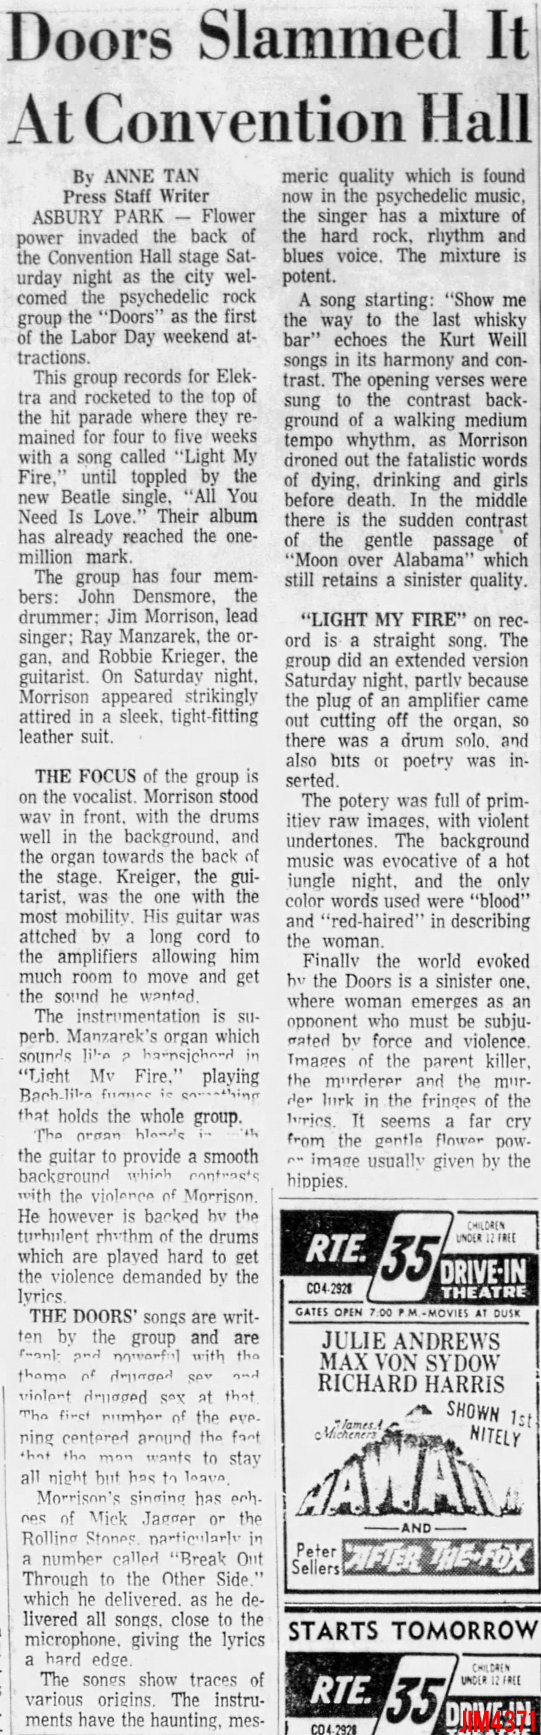 The Doors - Asbury Park 1967 - Review